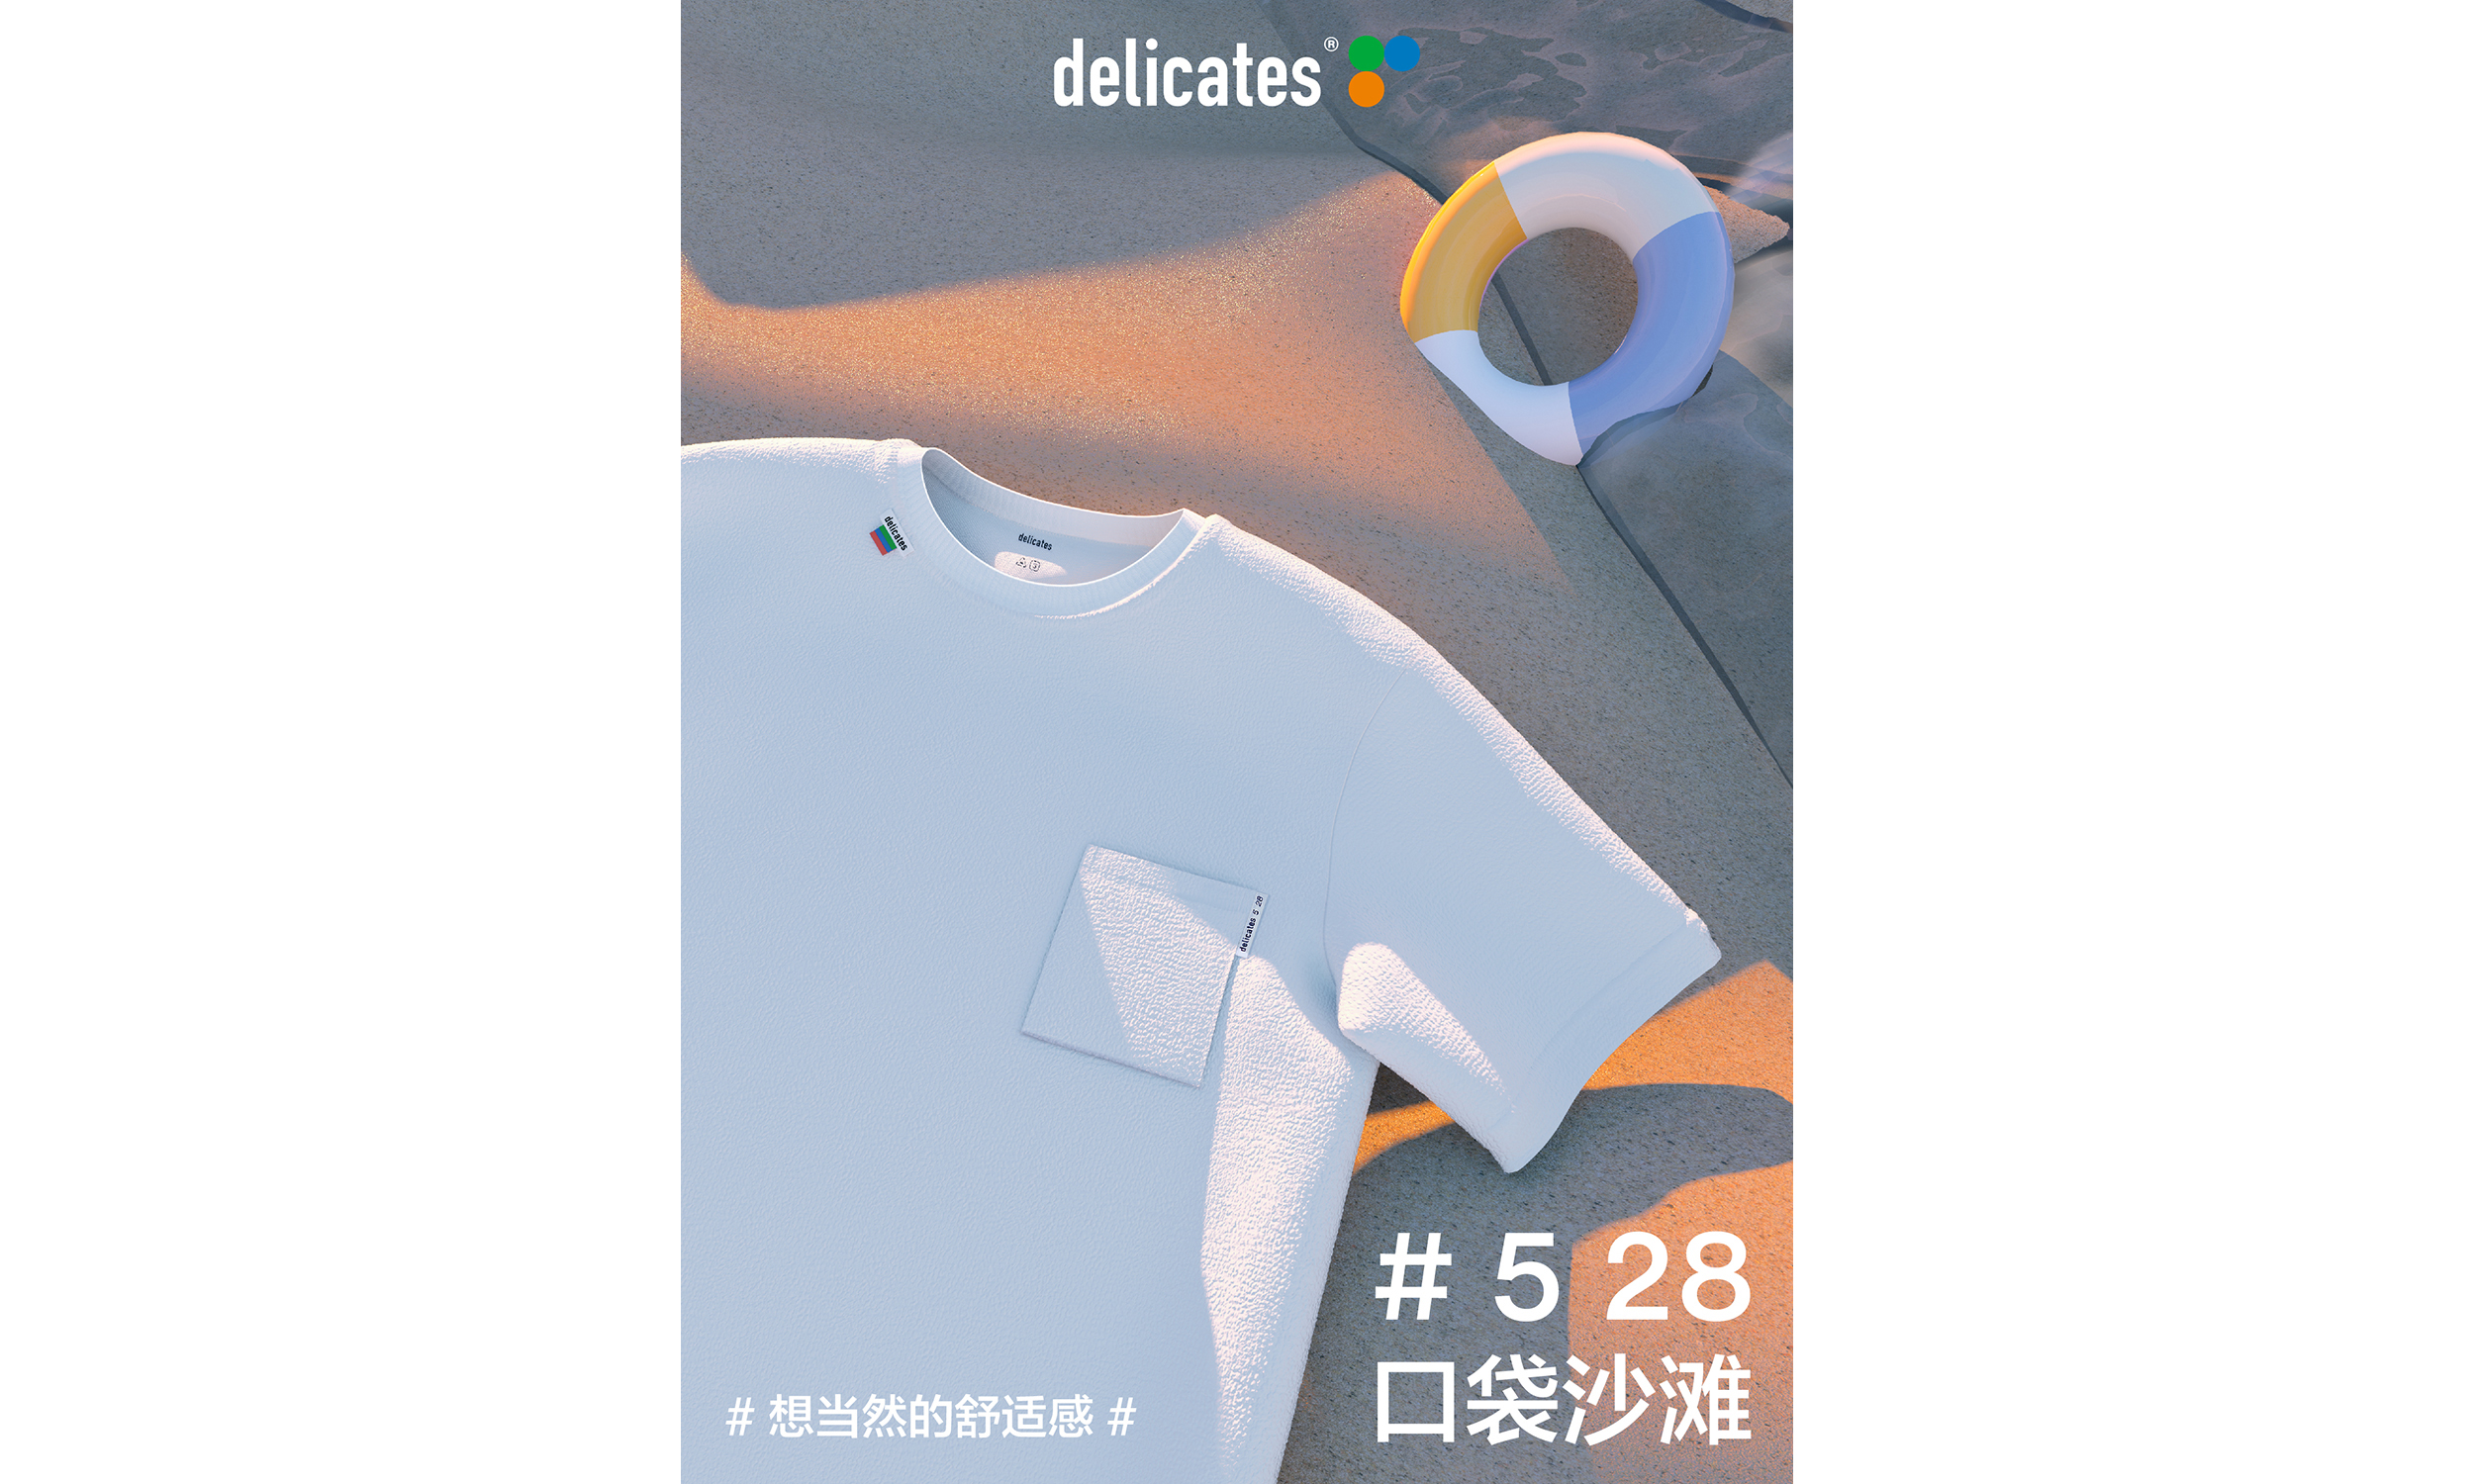 delicates 发布「wonderfour」夏日企划